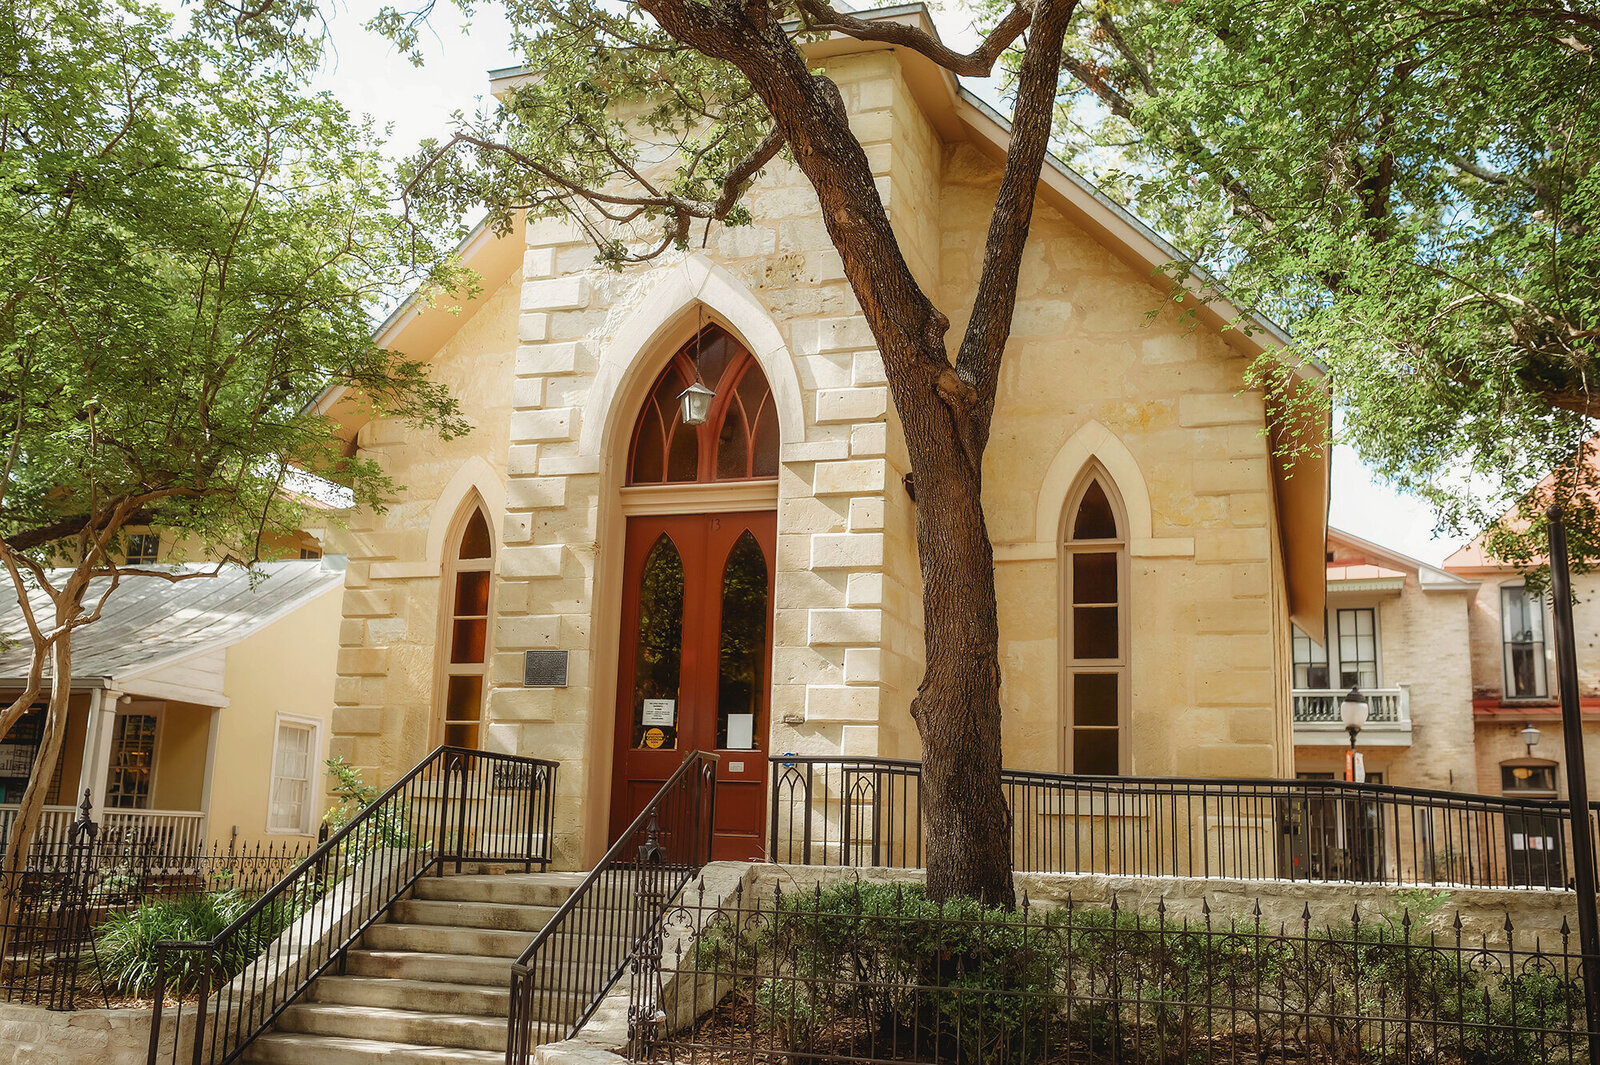 Chapel at La Villita in San Antonio, Texas.